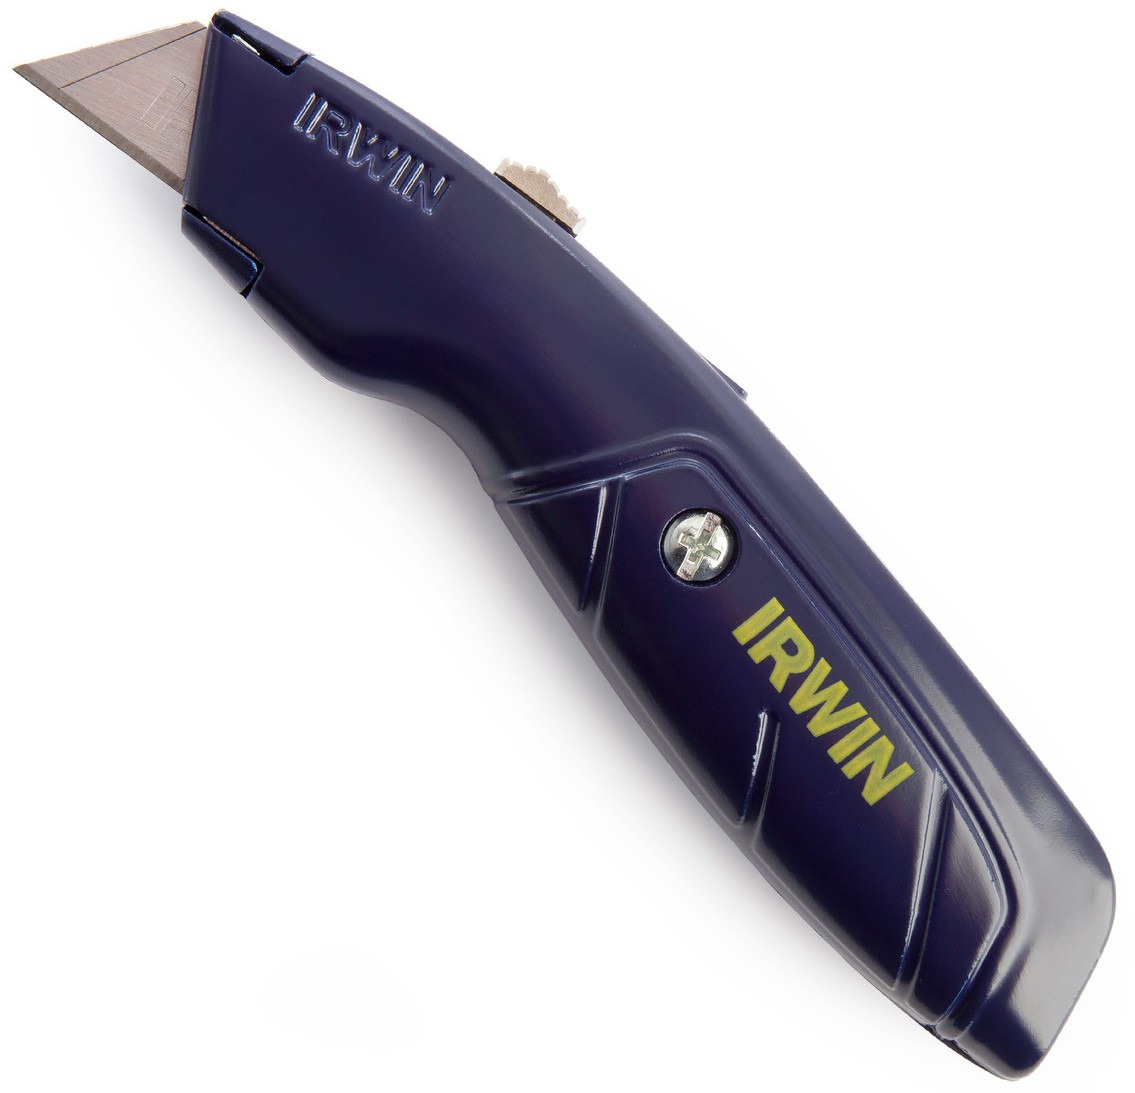 Нож с выдвижным лезвием IRWIN Professional 10504238 - фото